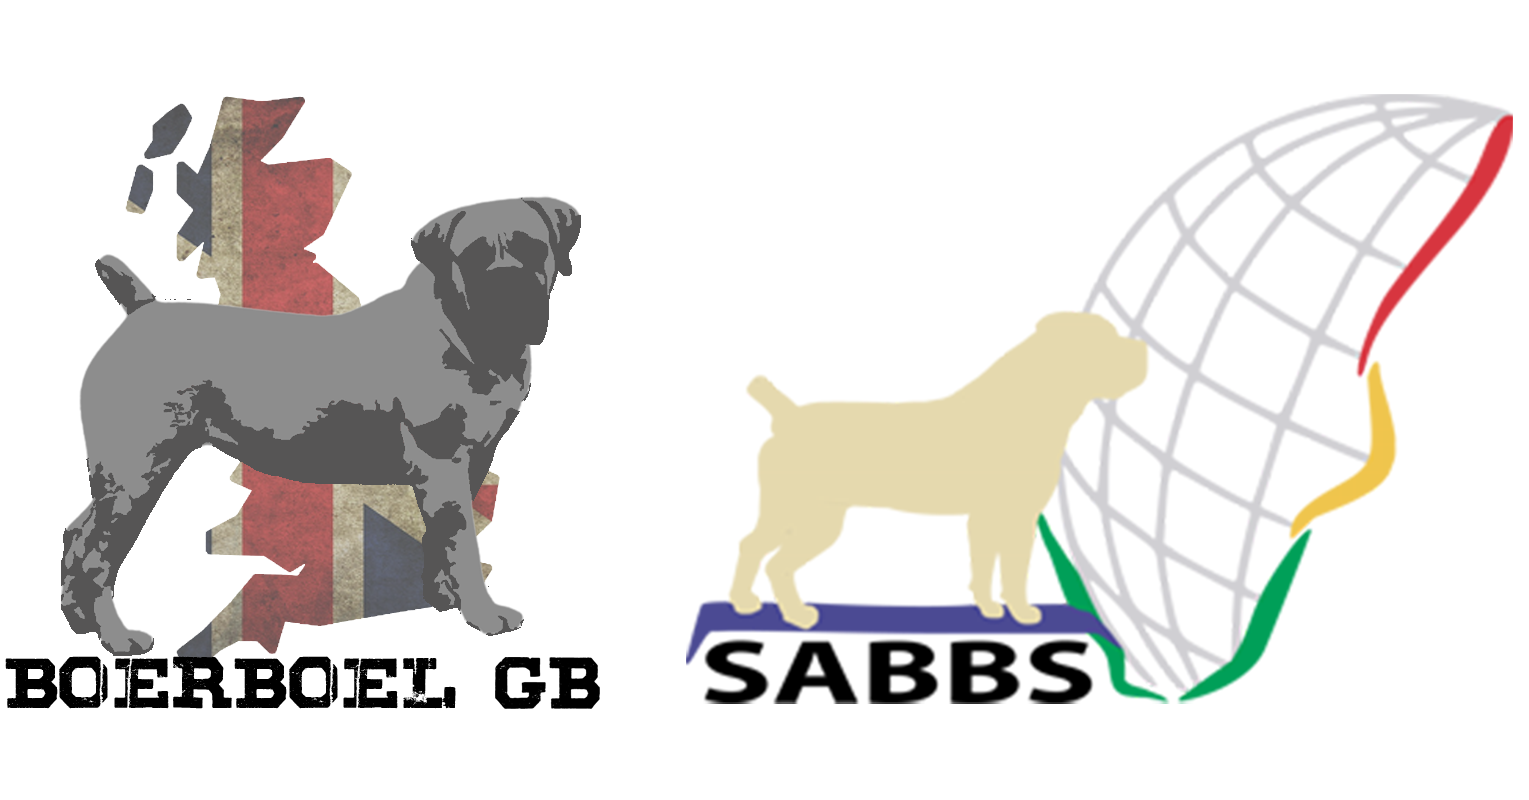 Boerboel GB are SABBS affiliated